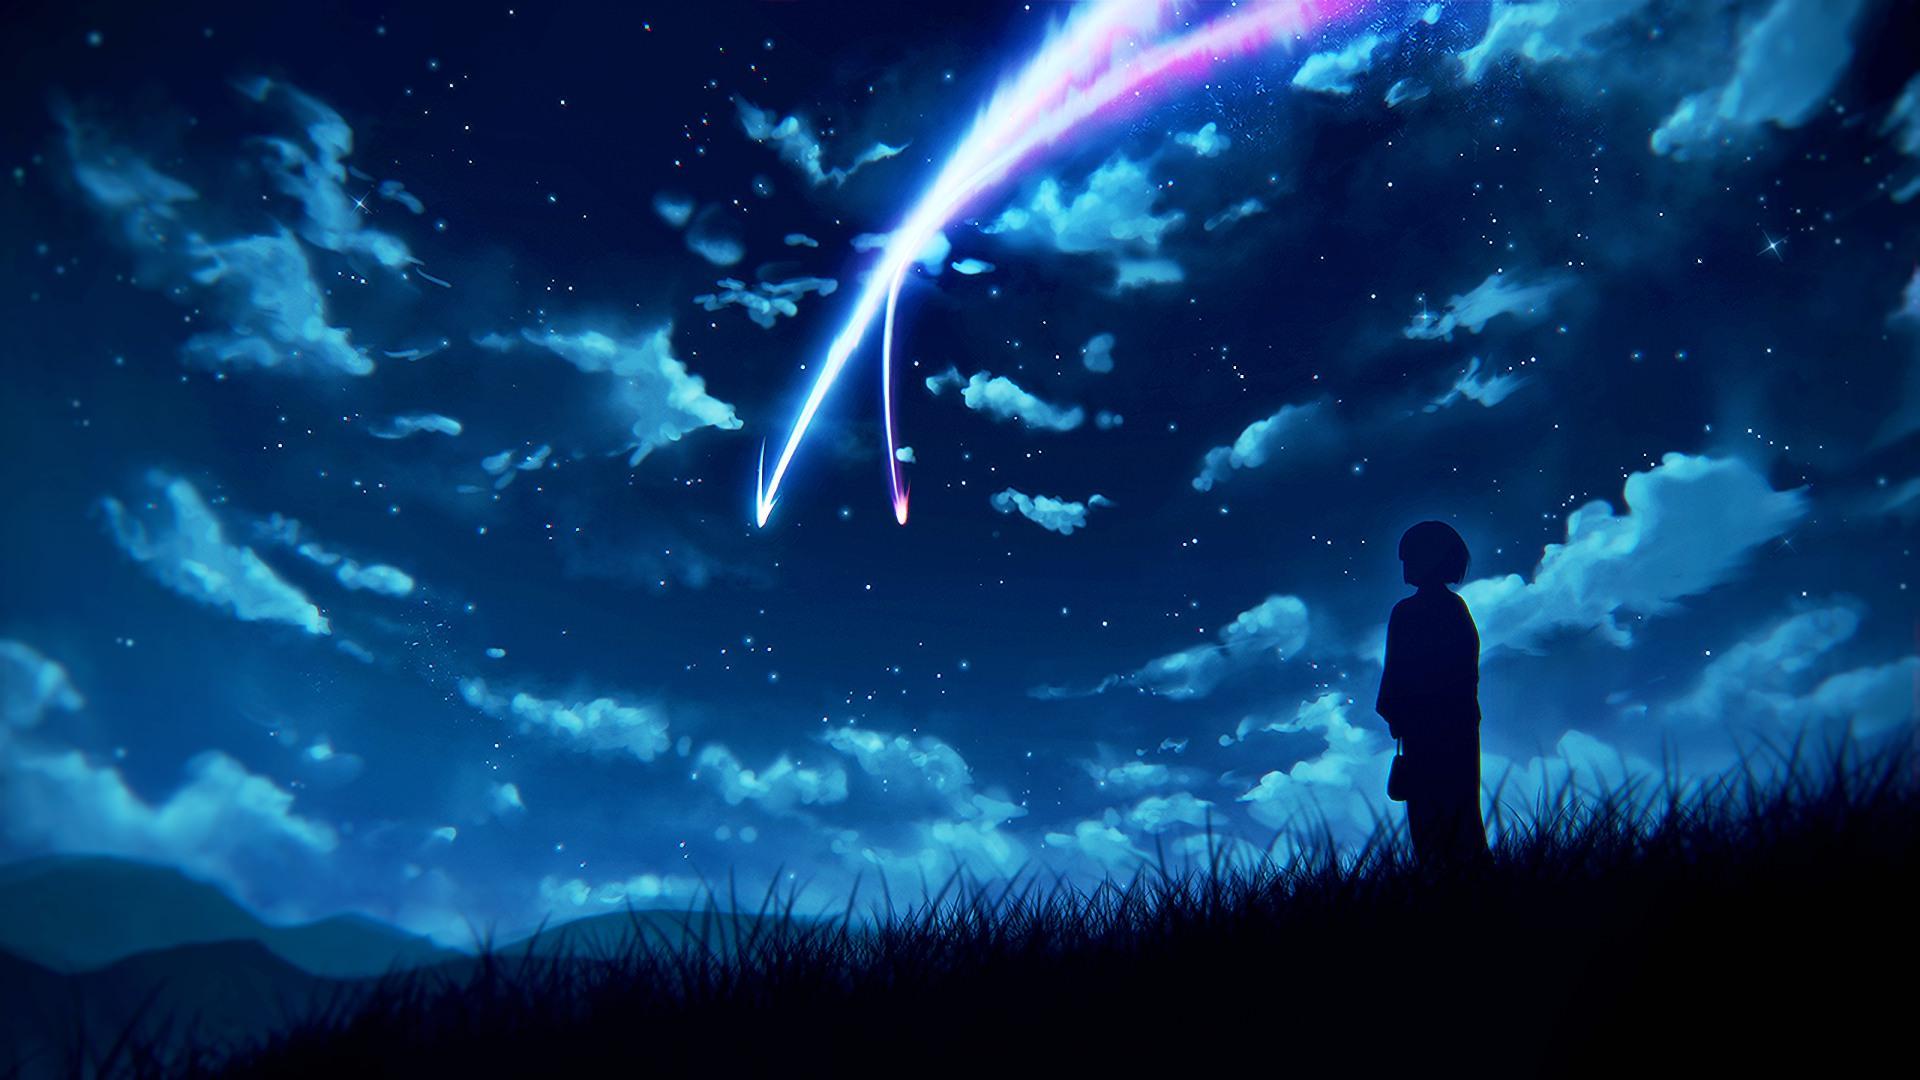 Anime Sky Wallpapers Top Free Anime Sky Backgrounds